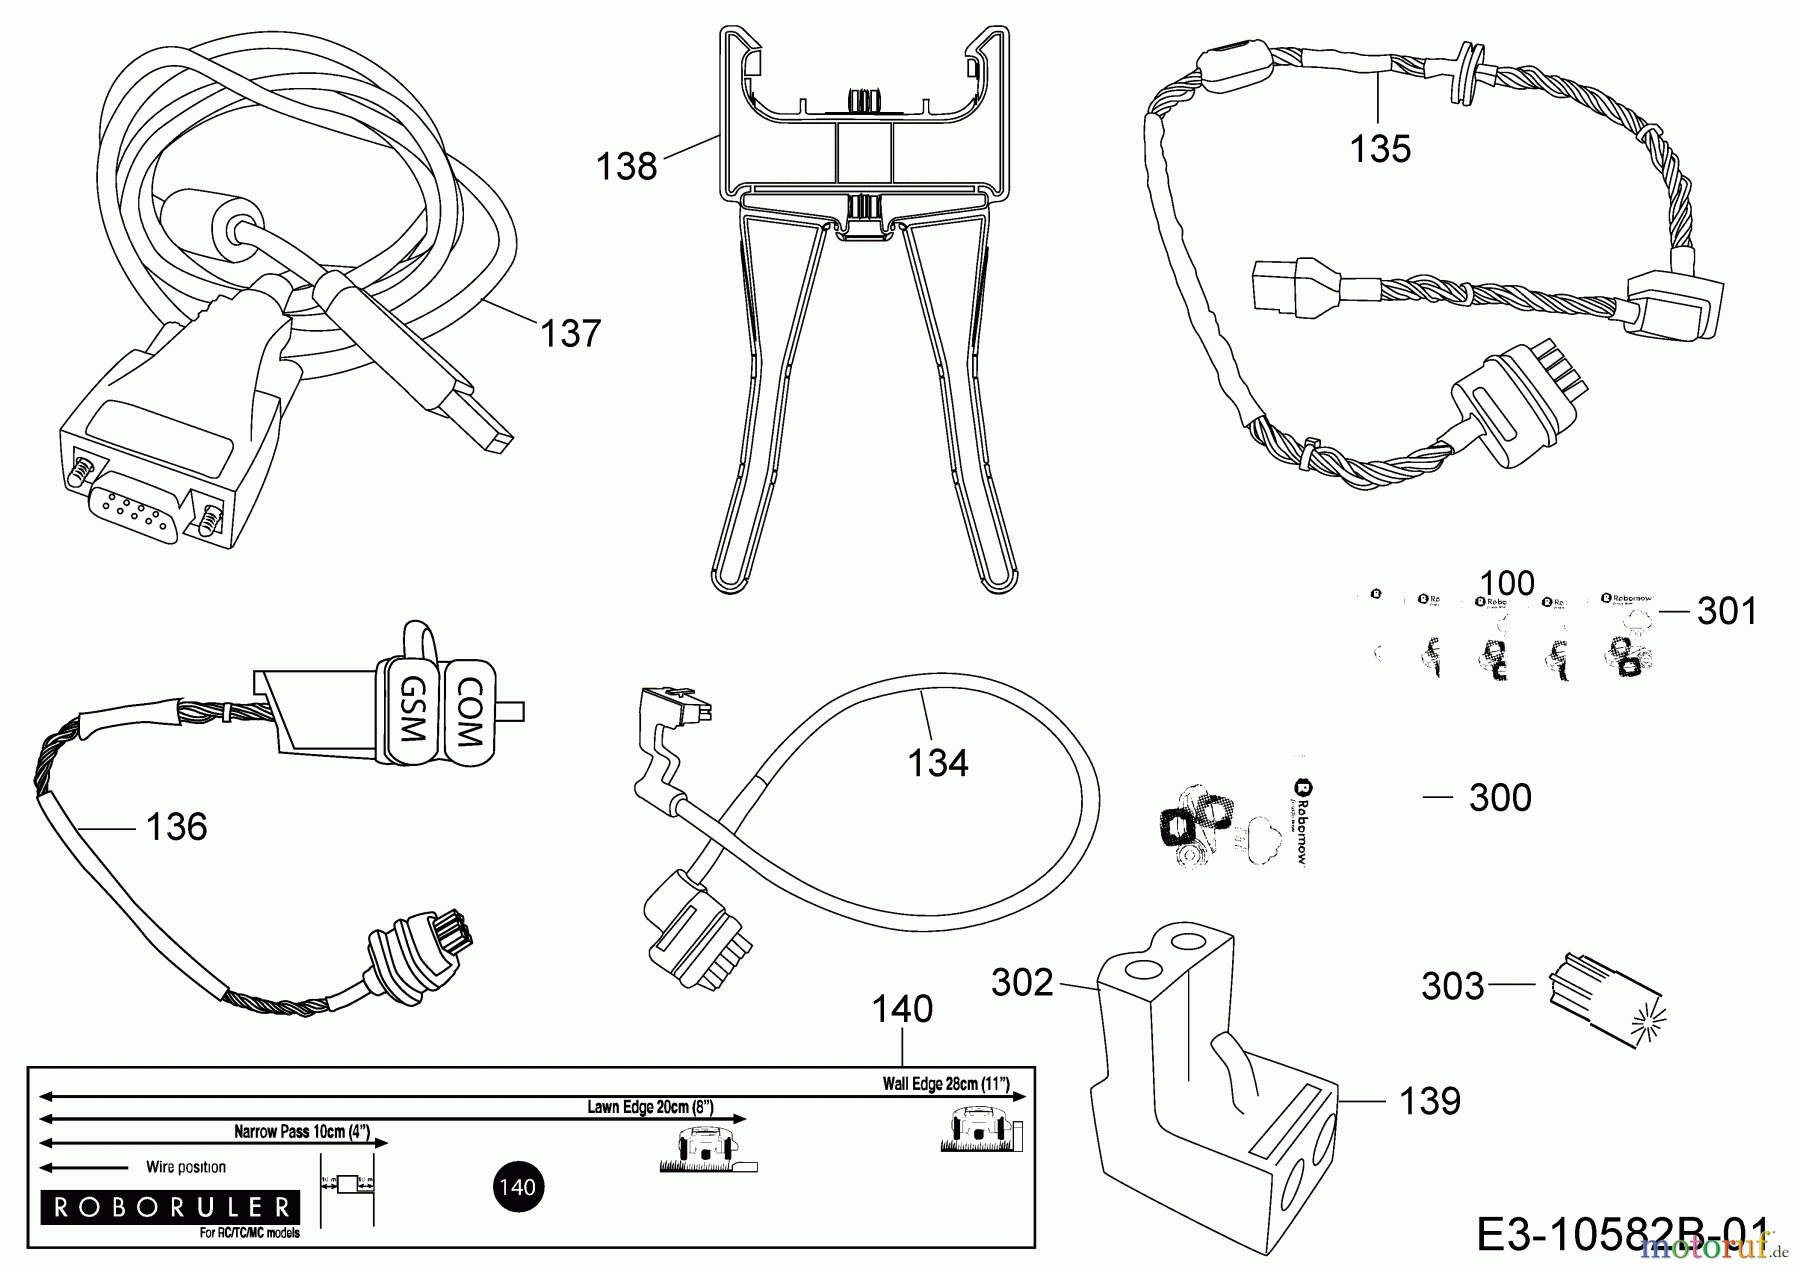  Robomow Mähroboter RC312 (Green) PRD7012B  (2016) Kabel, Kabelanschluß, Regensensor, Werkzeug